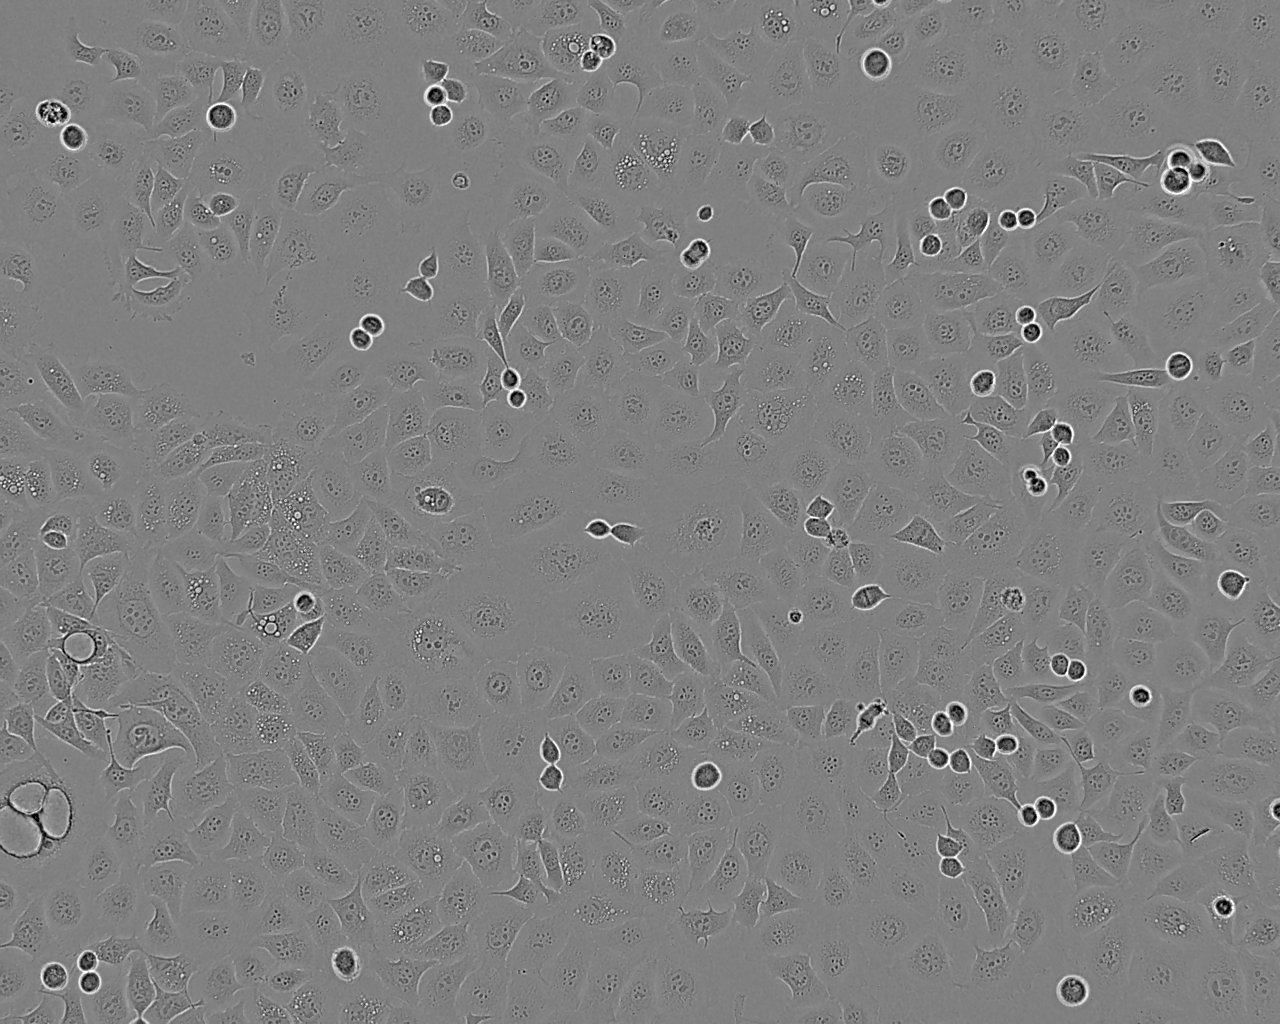 MN9D Cells|小鼠中脑多巴胺能神经元克隆细胞,MN9D Cells